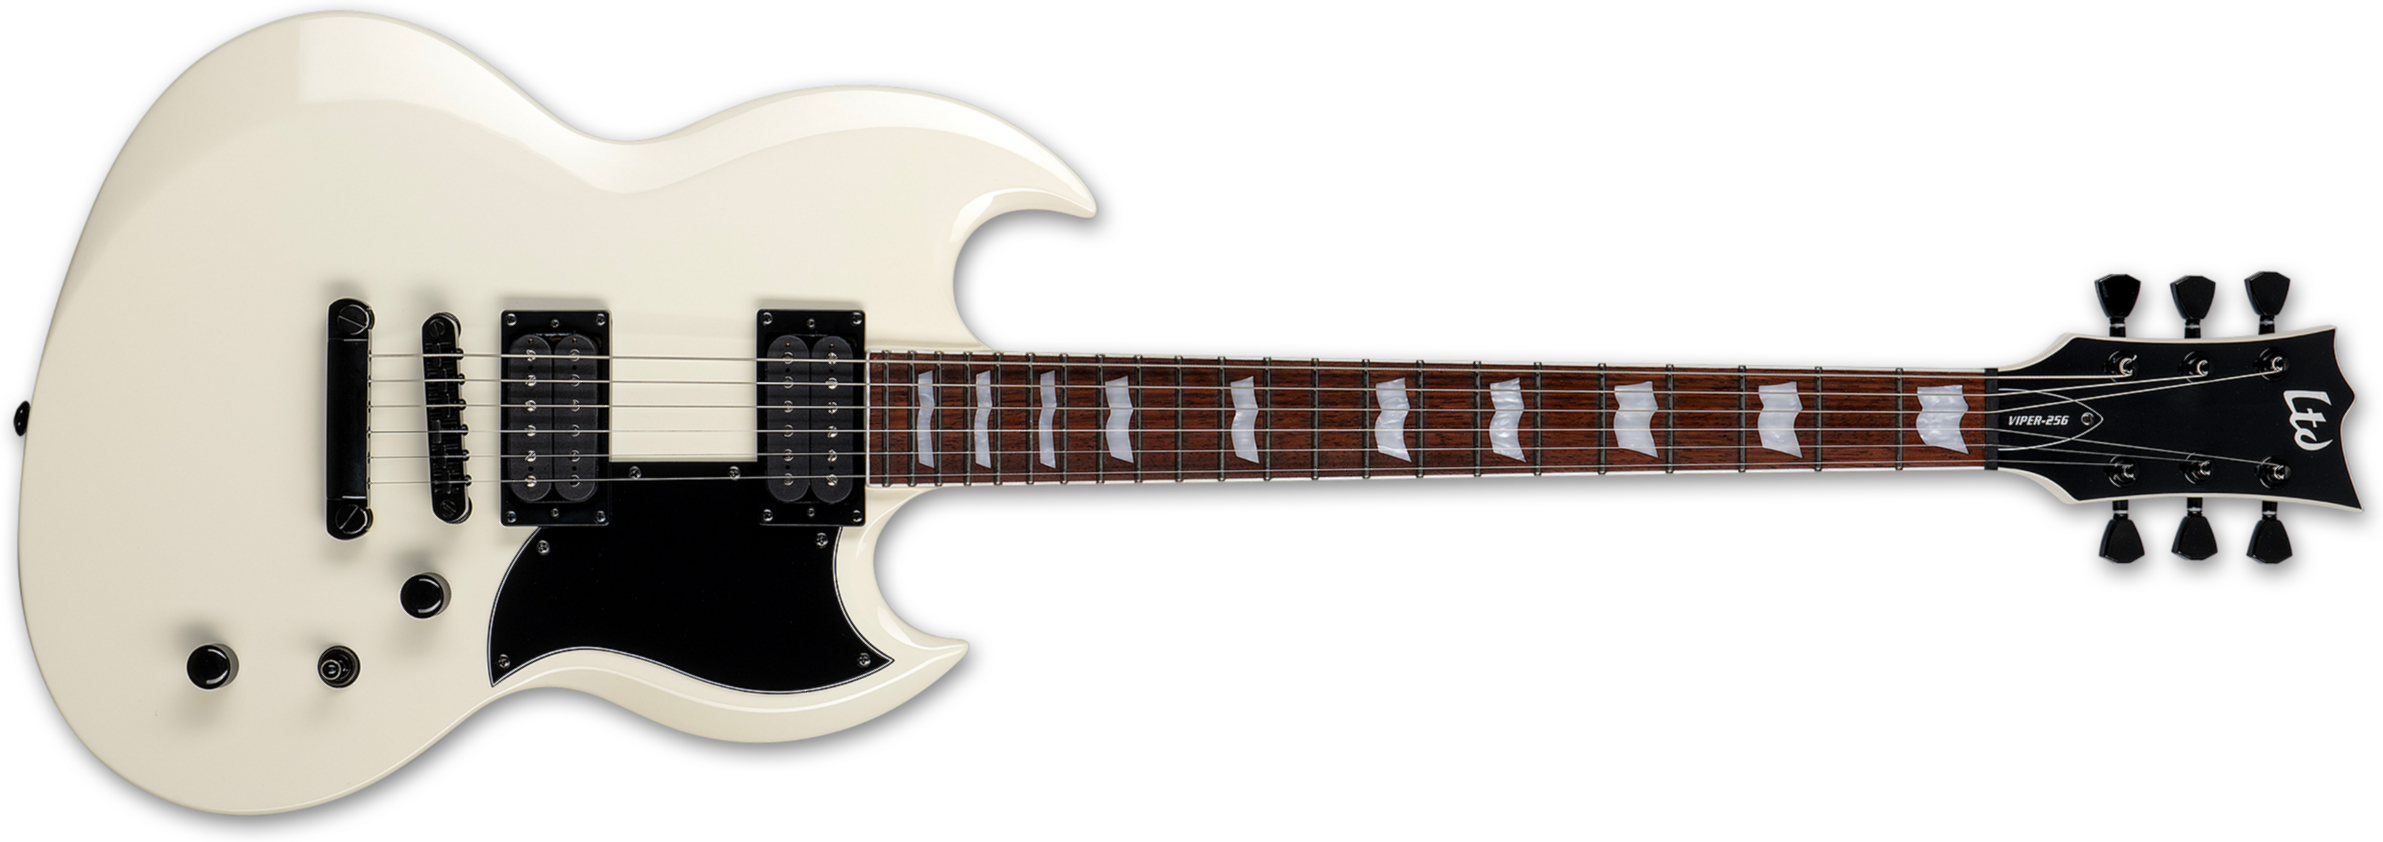 Ltd Viper-256 Hh Jat - Olympic White - Metalen elektrische gitaar - Main picture